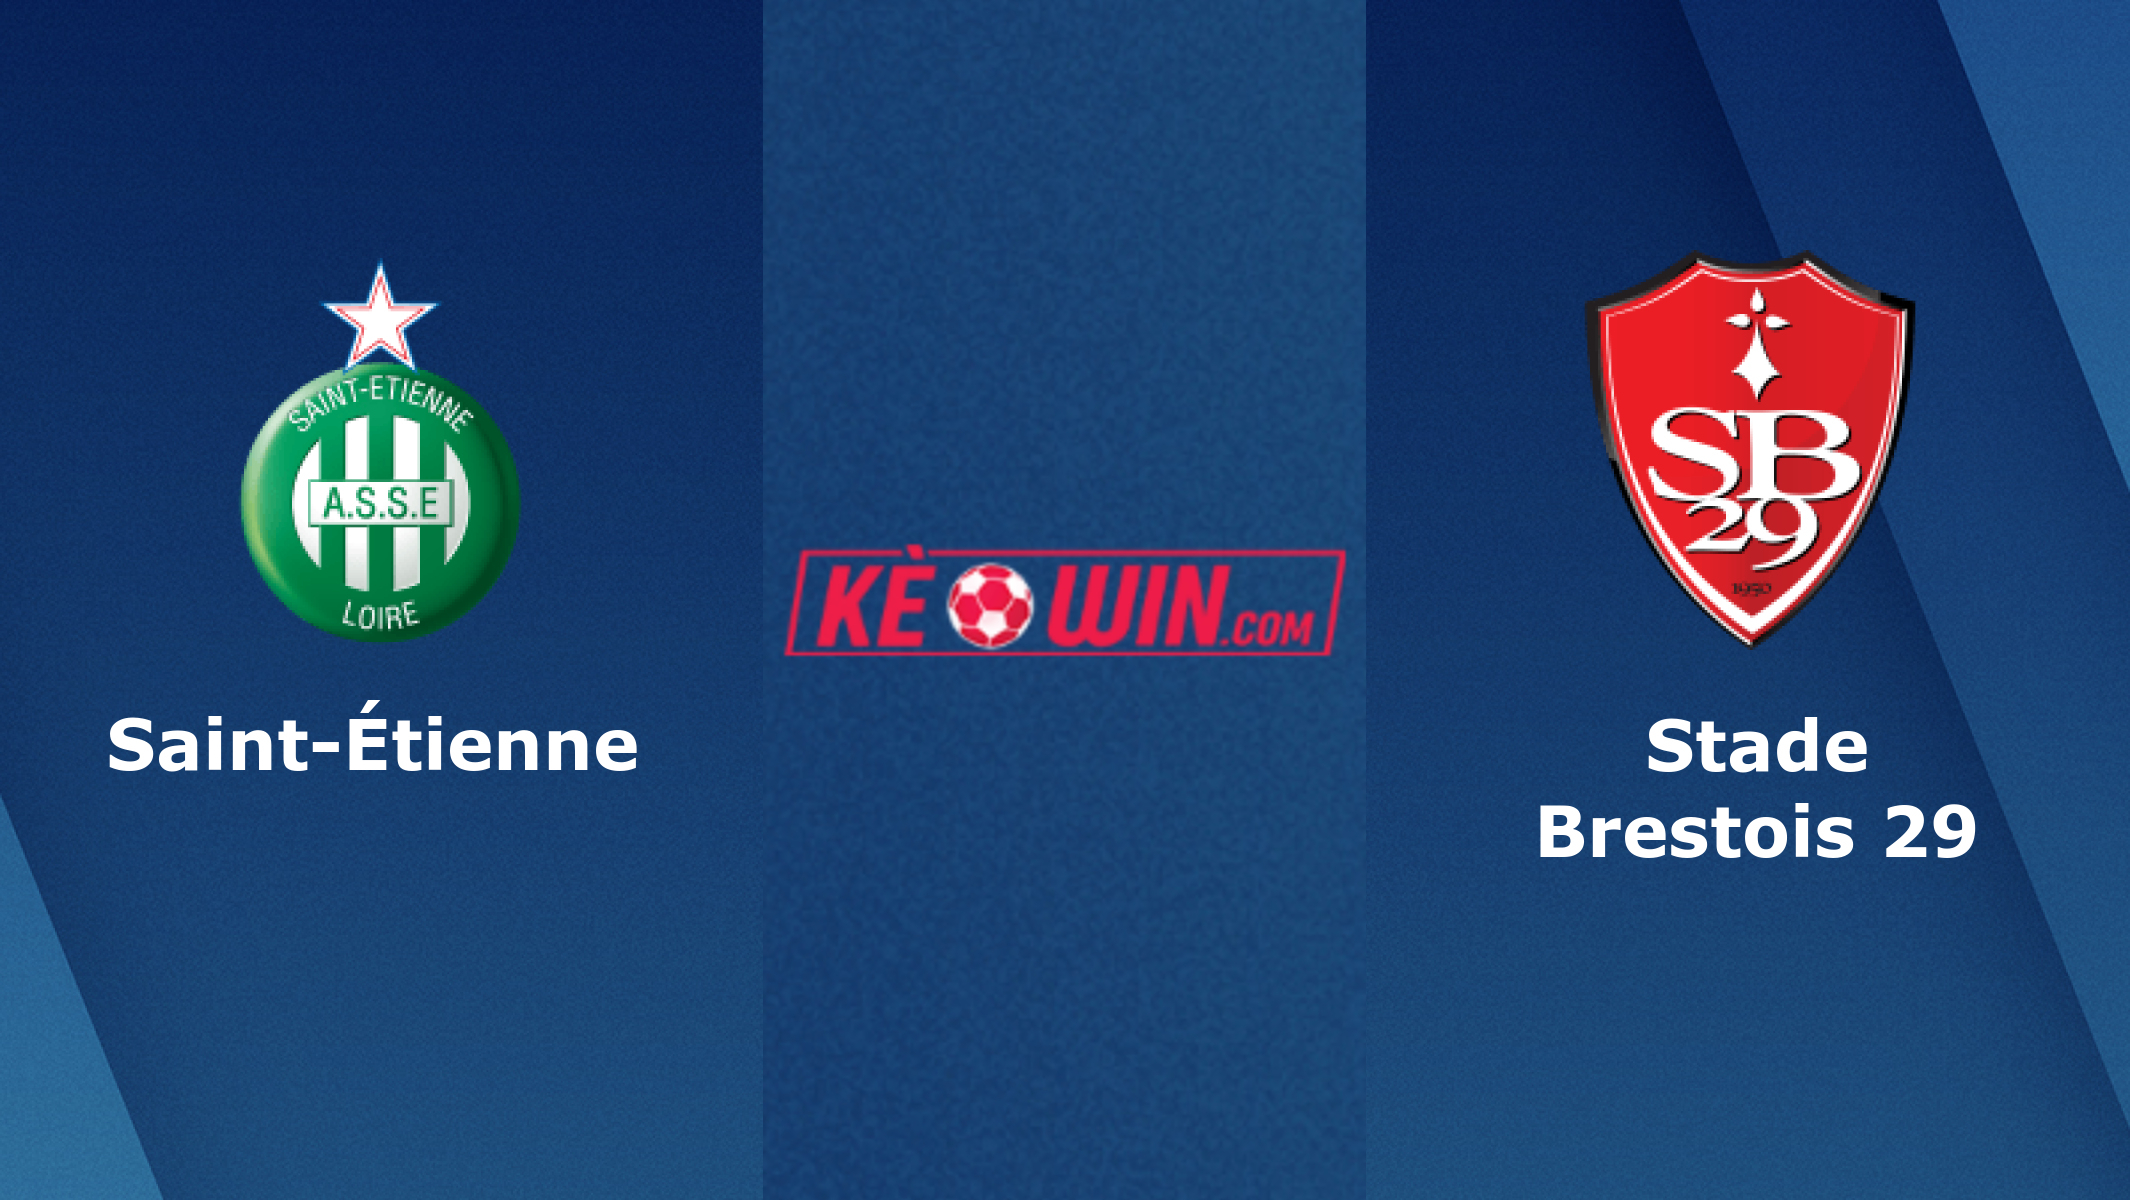 Saint-Étienne vs Stade Brestois 29 – Soi kèo bóng 22h00 16/04/2022 – VĐQG Pháp